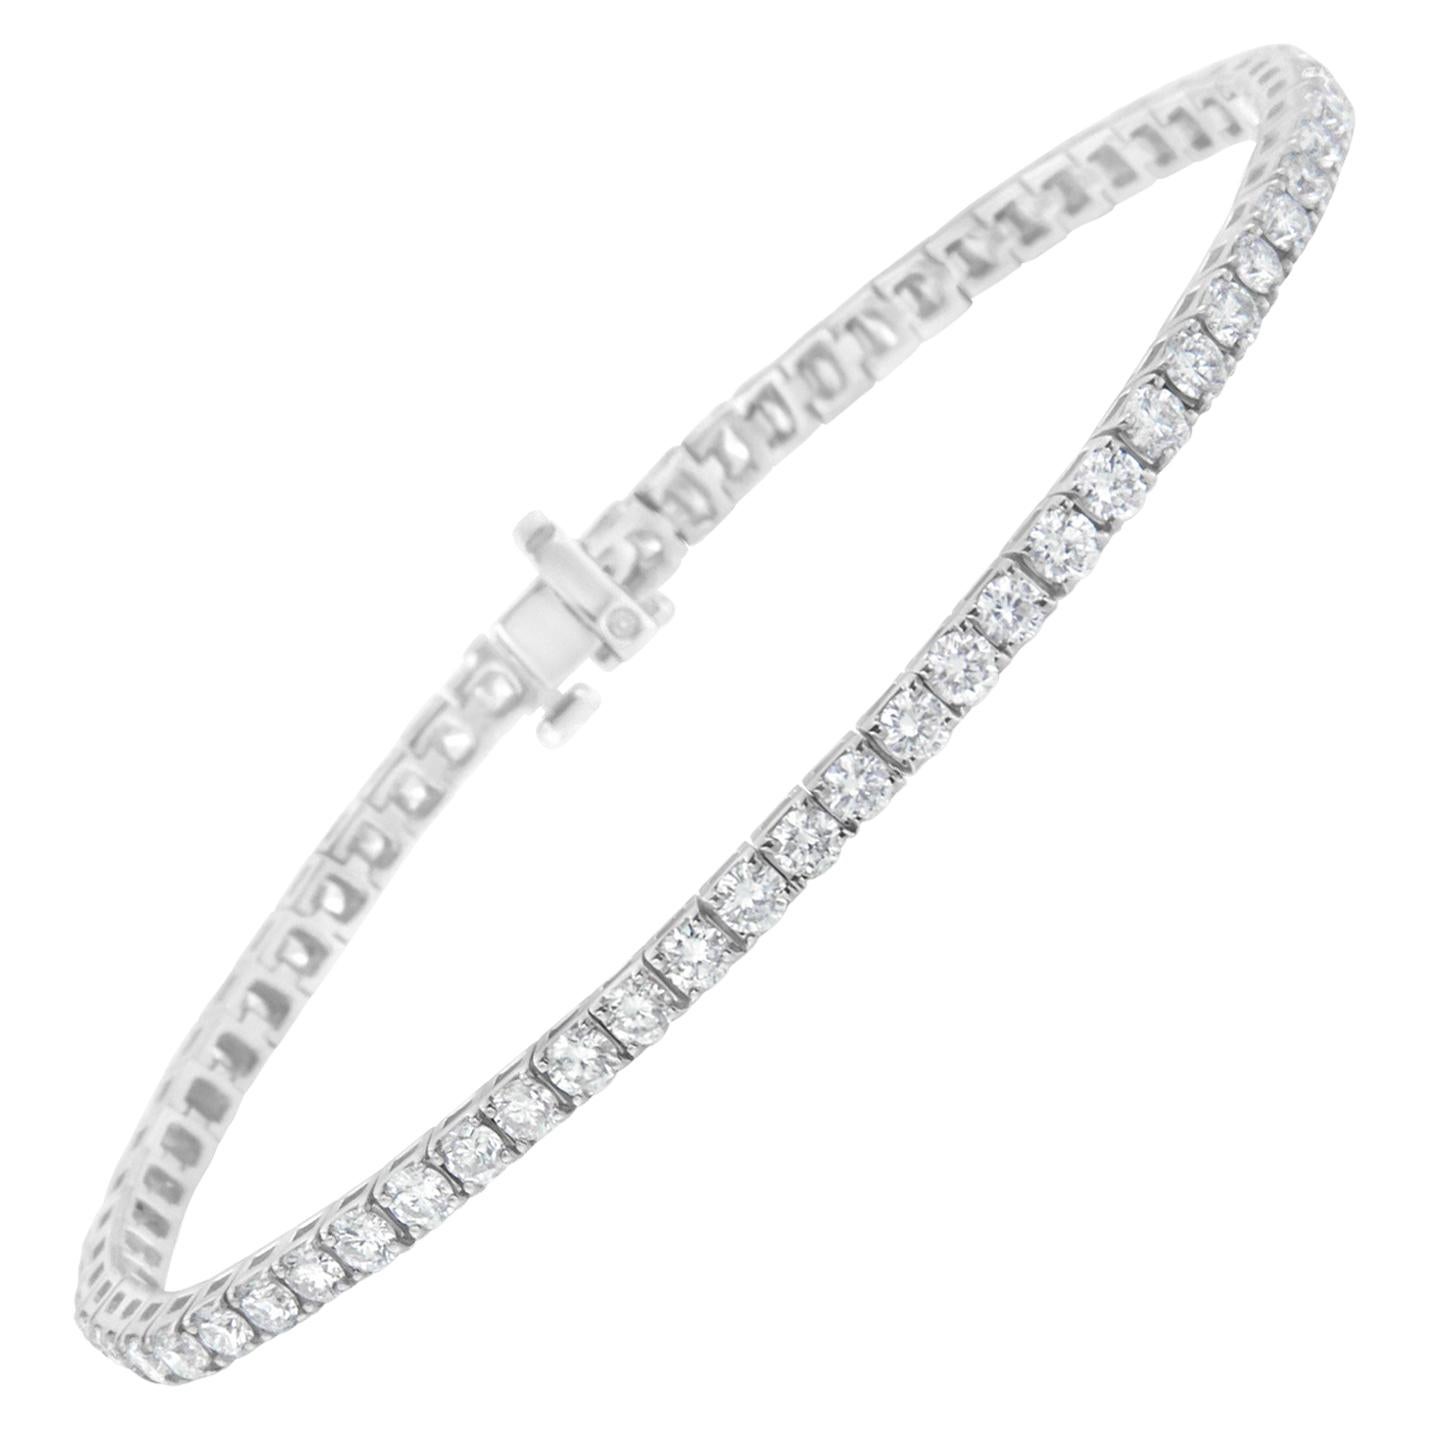 Bracelet tennis classique en or blanc 14 carats avec diamants de 8,0 carats certifiés IGI